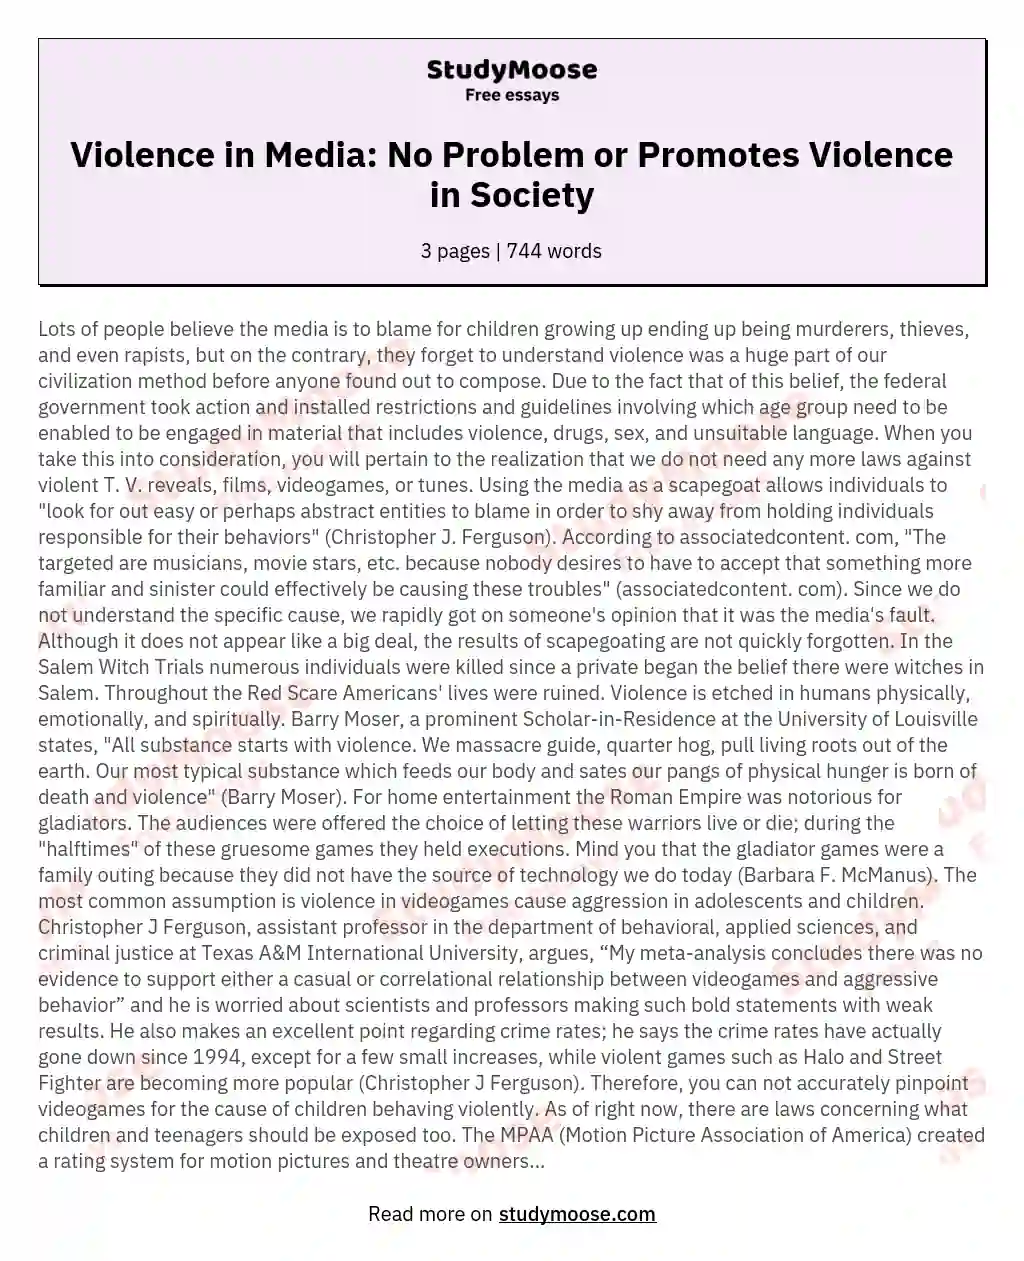 Violence in Media: No Problem or Promotes Violence in Society essay